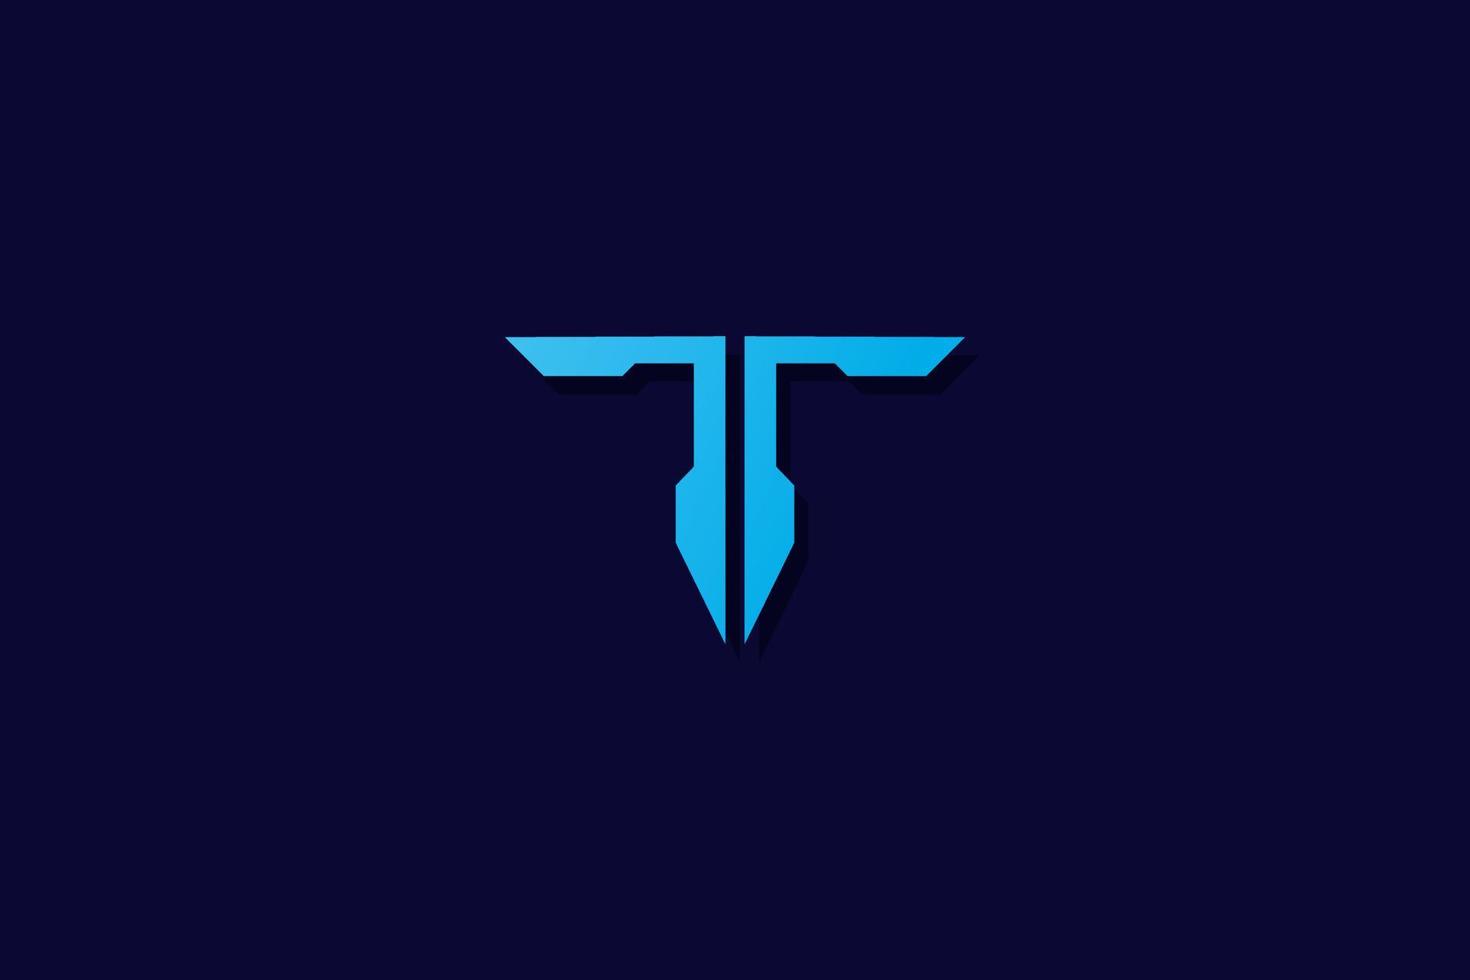 Abstract Letter T logo . Letter T technology style logo design . vector illustration